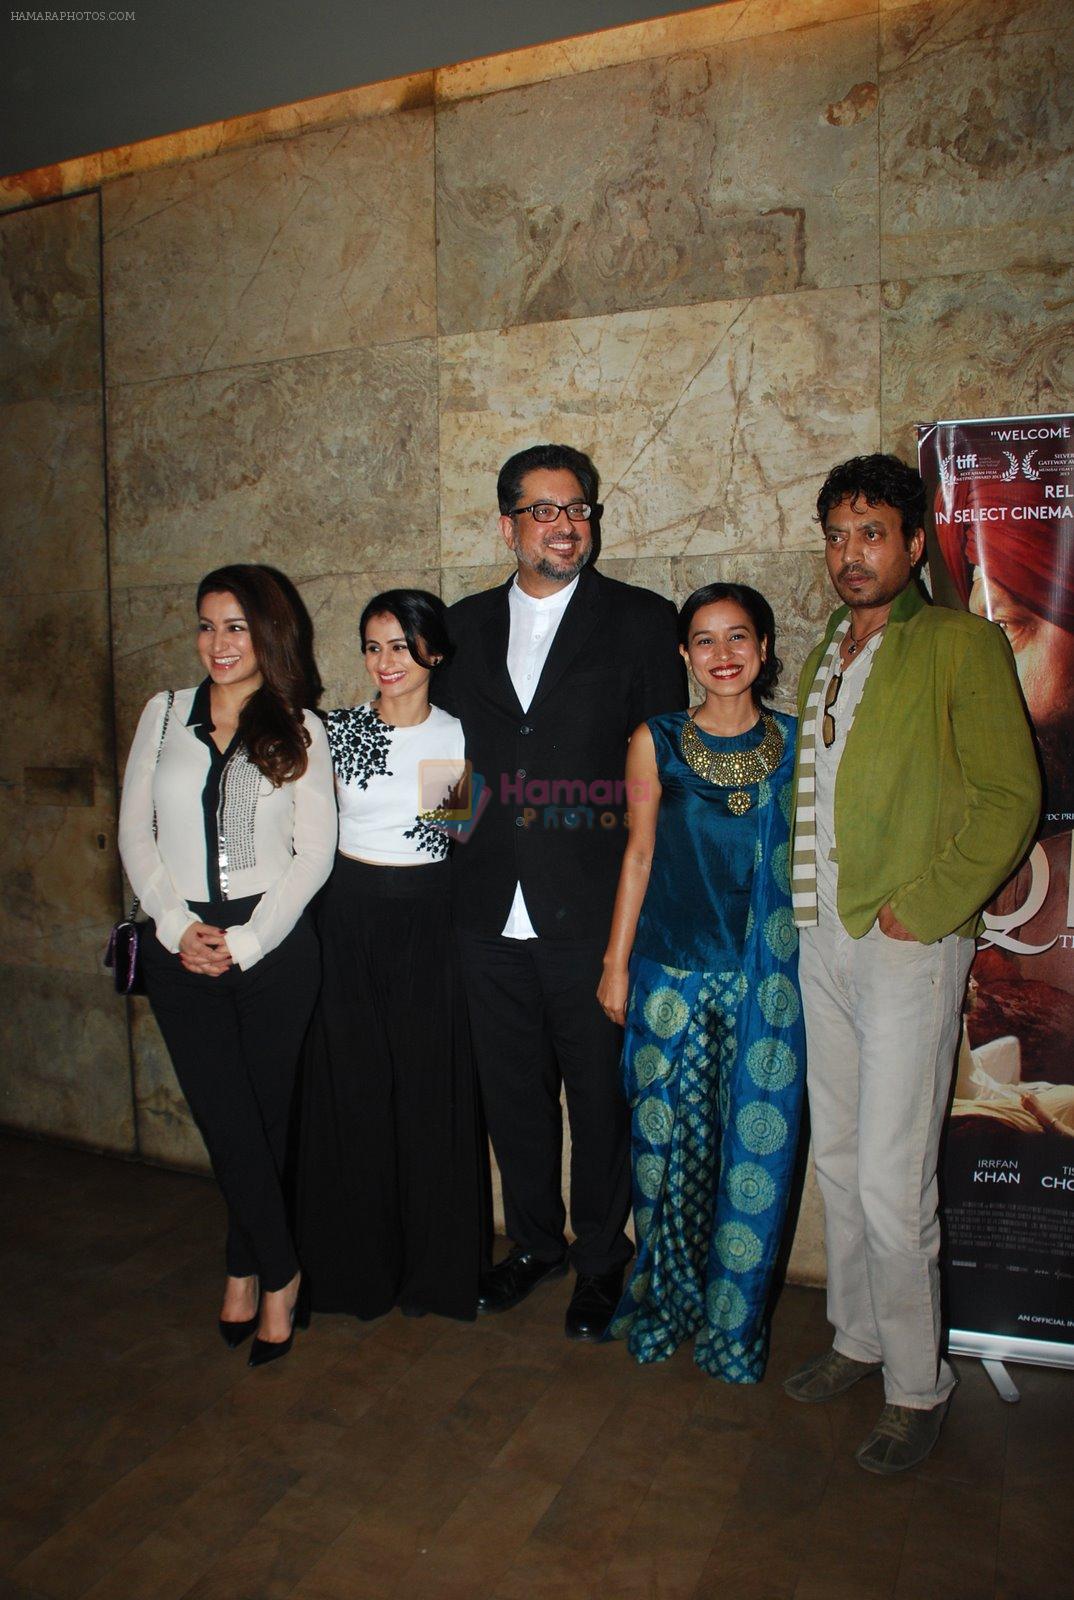 Tisca Chopra, Irrfan Khan, Tillotama Shome at Qissa screening in Lightbox, Mumbai on 19th Feb 2015